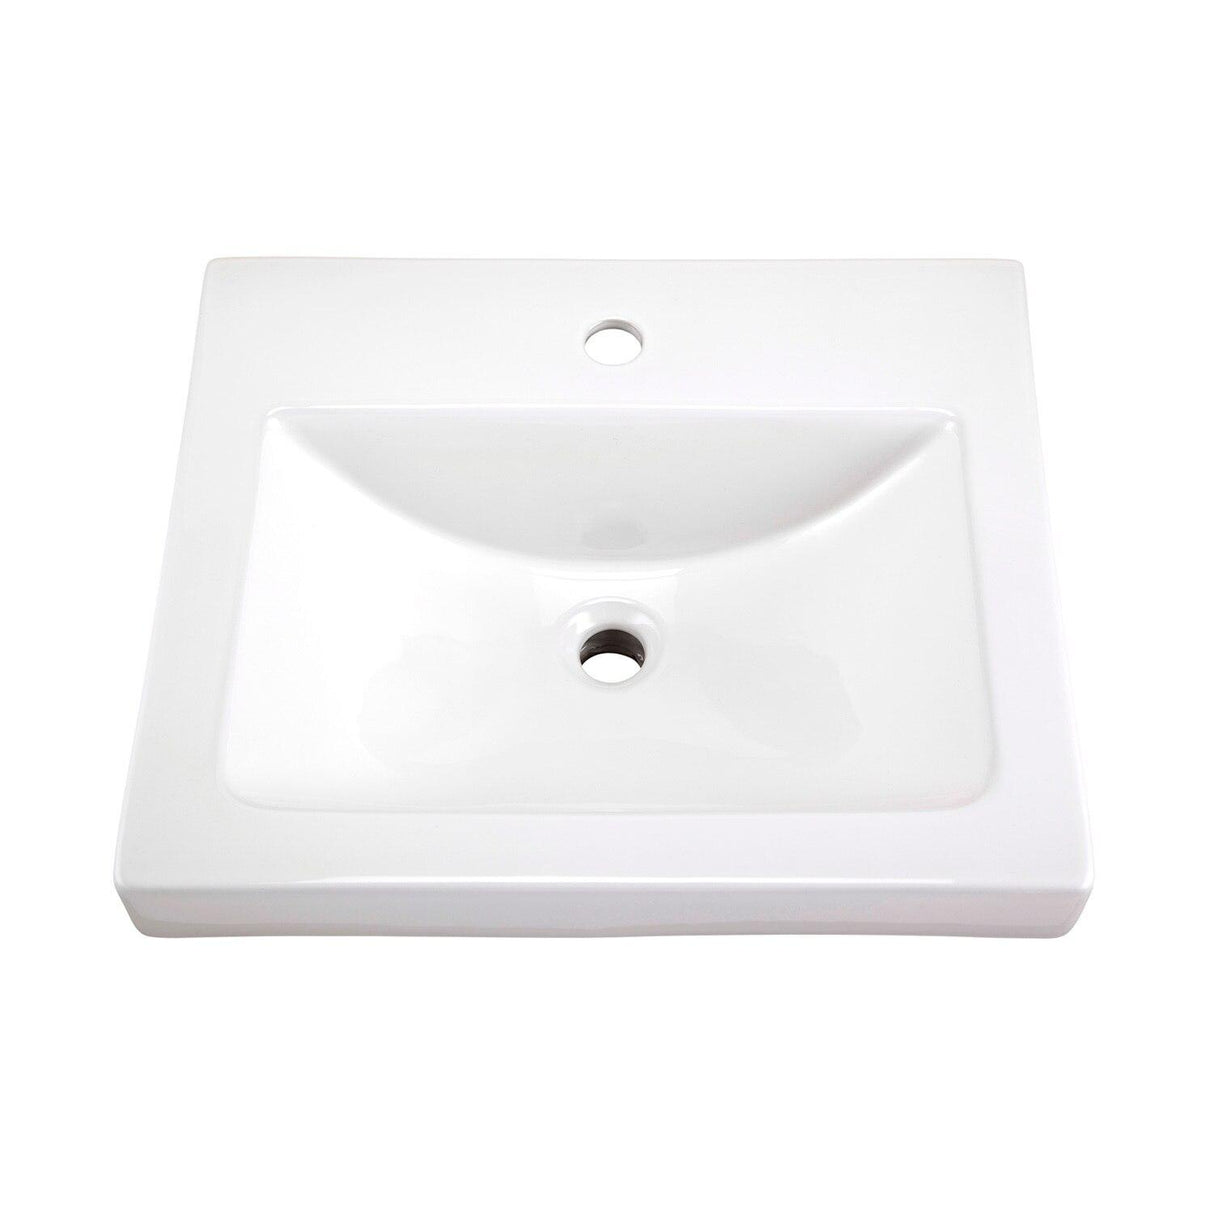 Gerber G0012892 White Wicker Park Rectangular Single Hole Above Counter Bathroom Sink